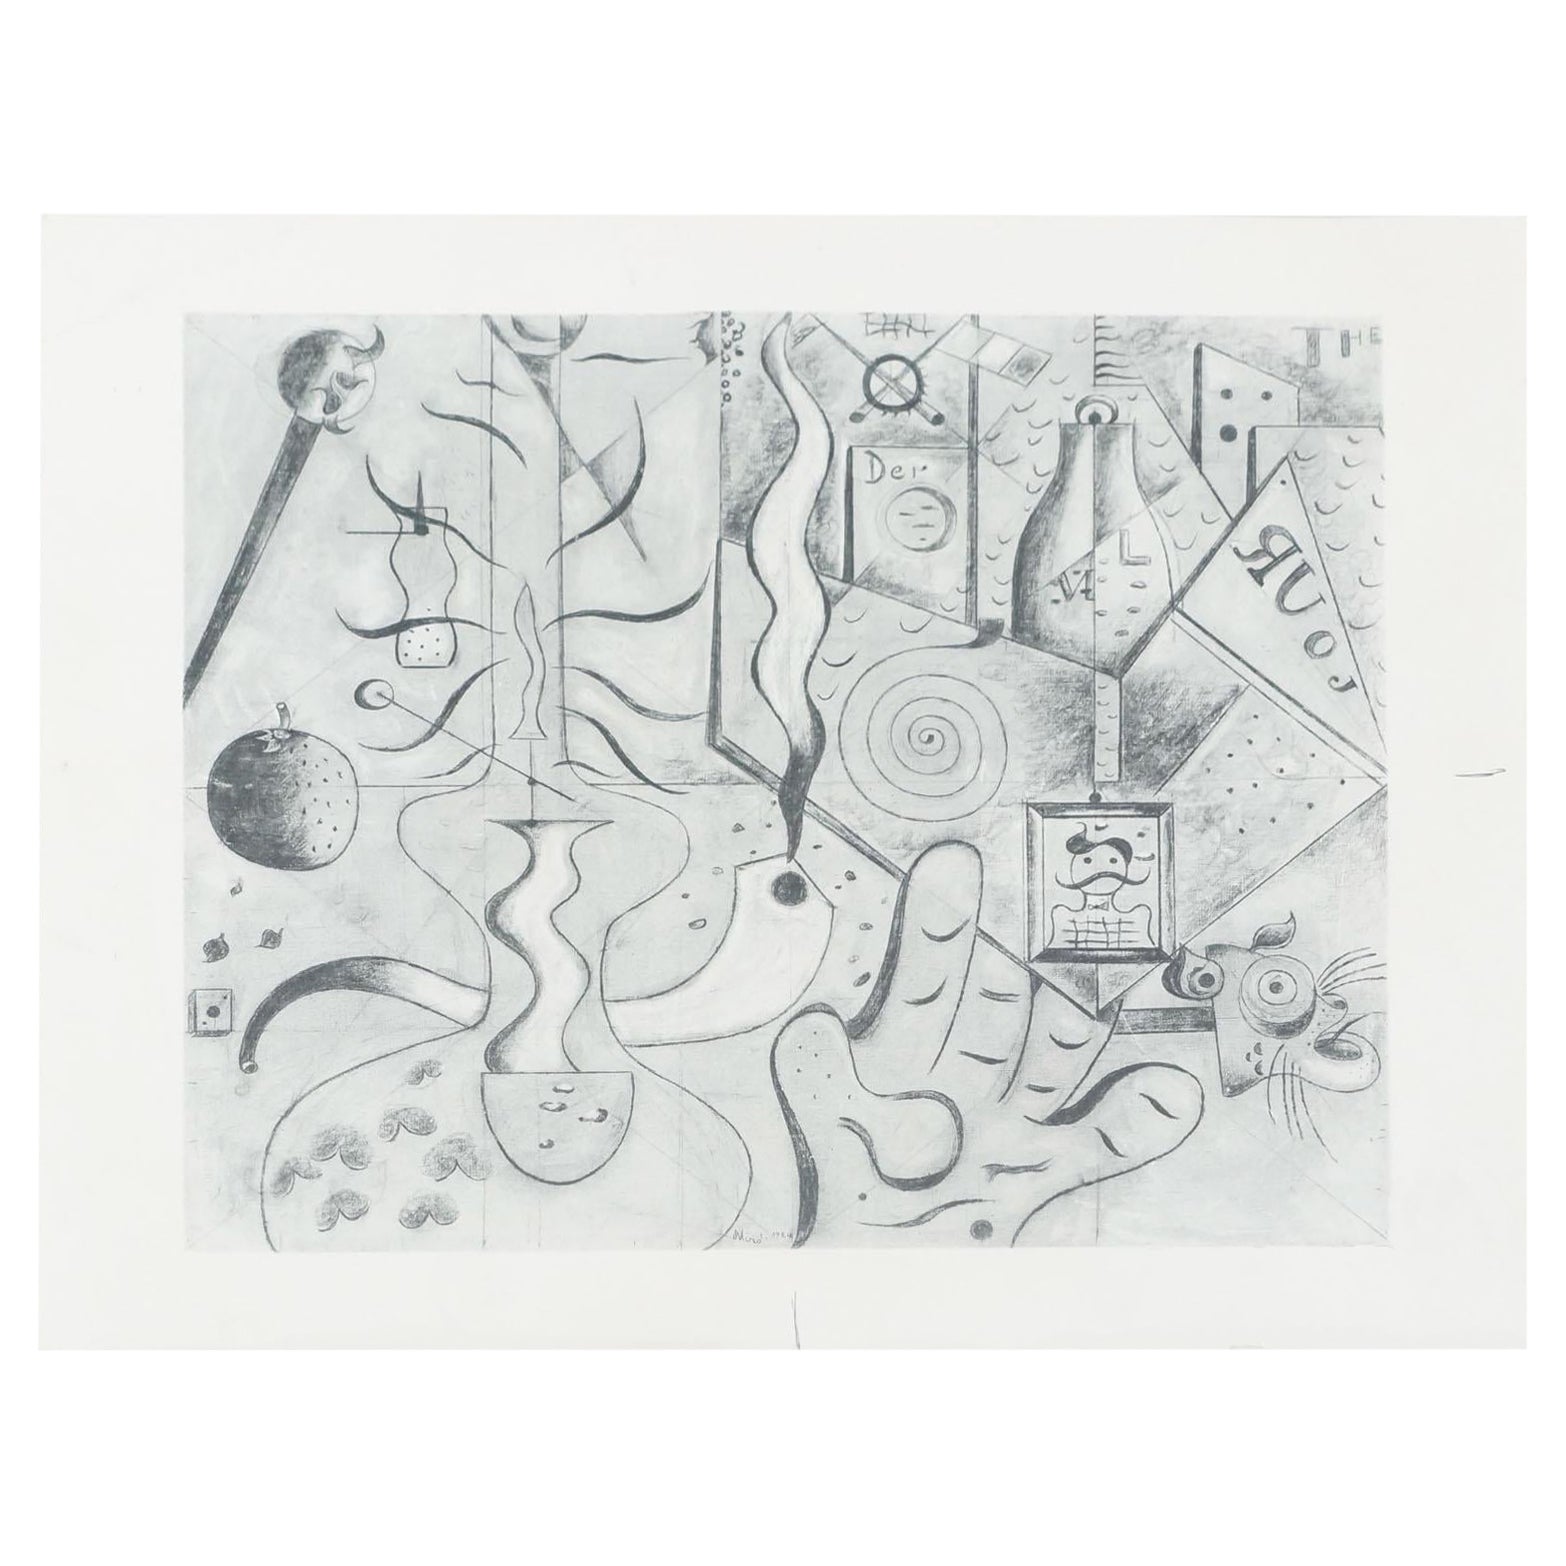 Fotografie des Joan Miro-Gemäldes, 1979, Art Institute of Chicago Archive